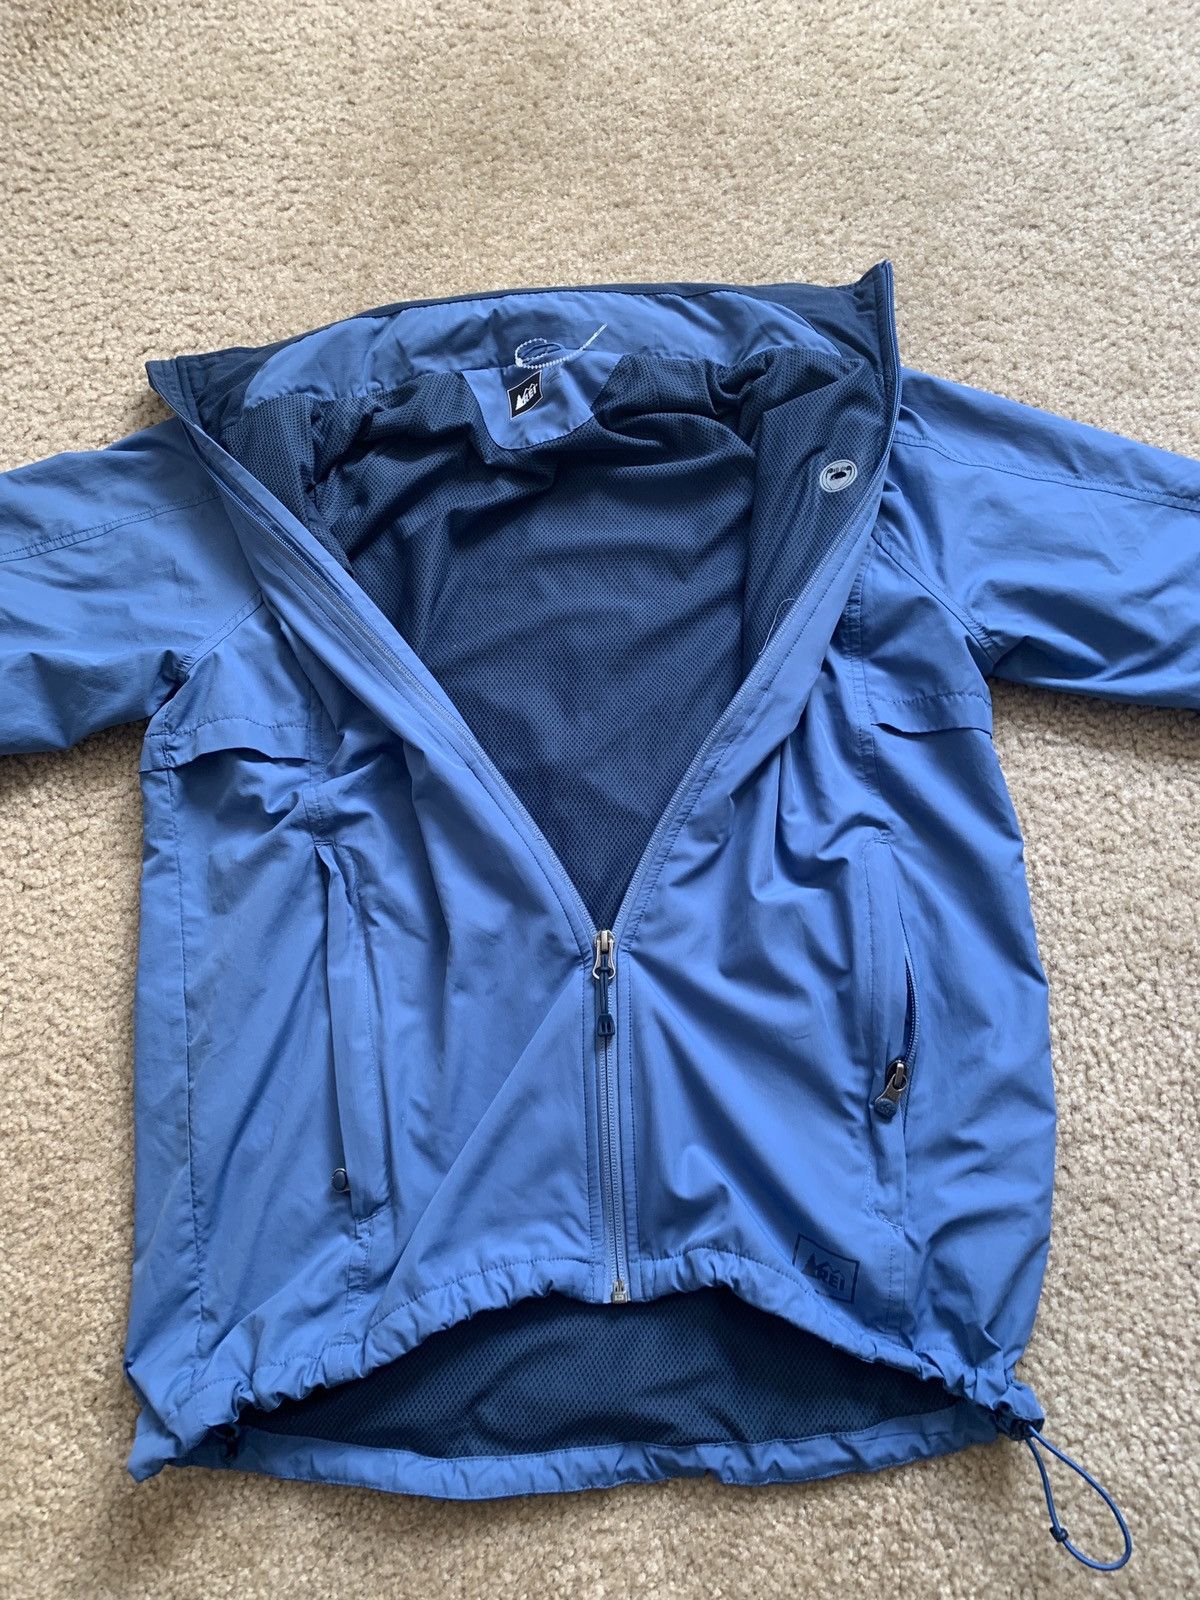 Rei Rei Raincoat Jacket (Blue) Size US S / EU 44-46 / 1 - 9 Thumbnail